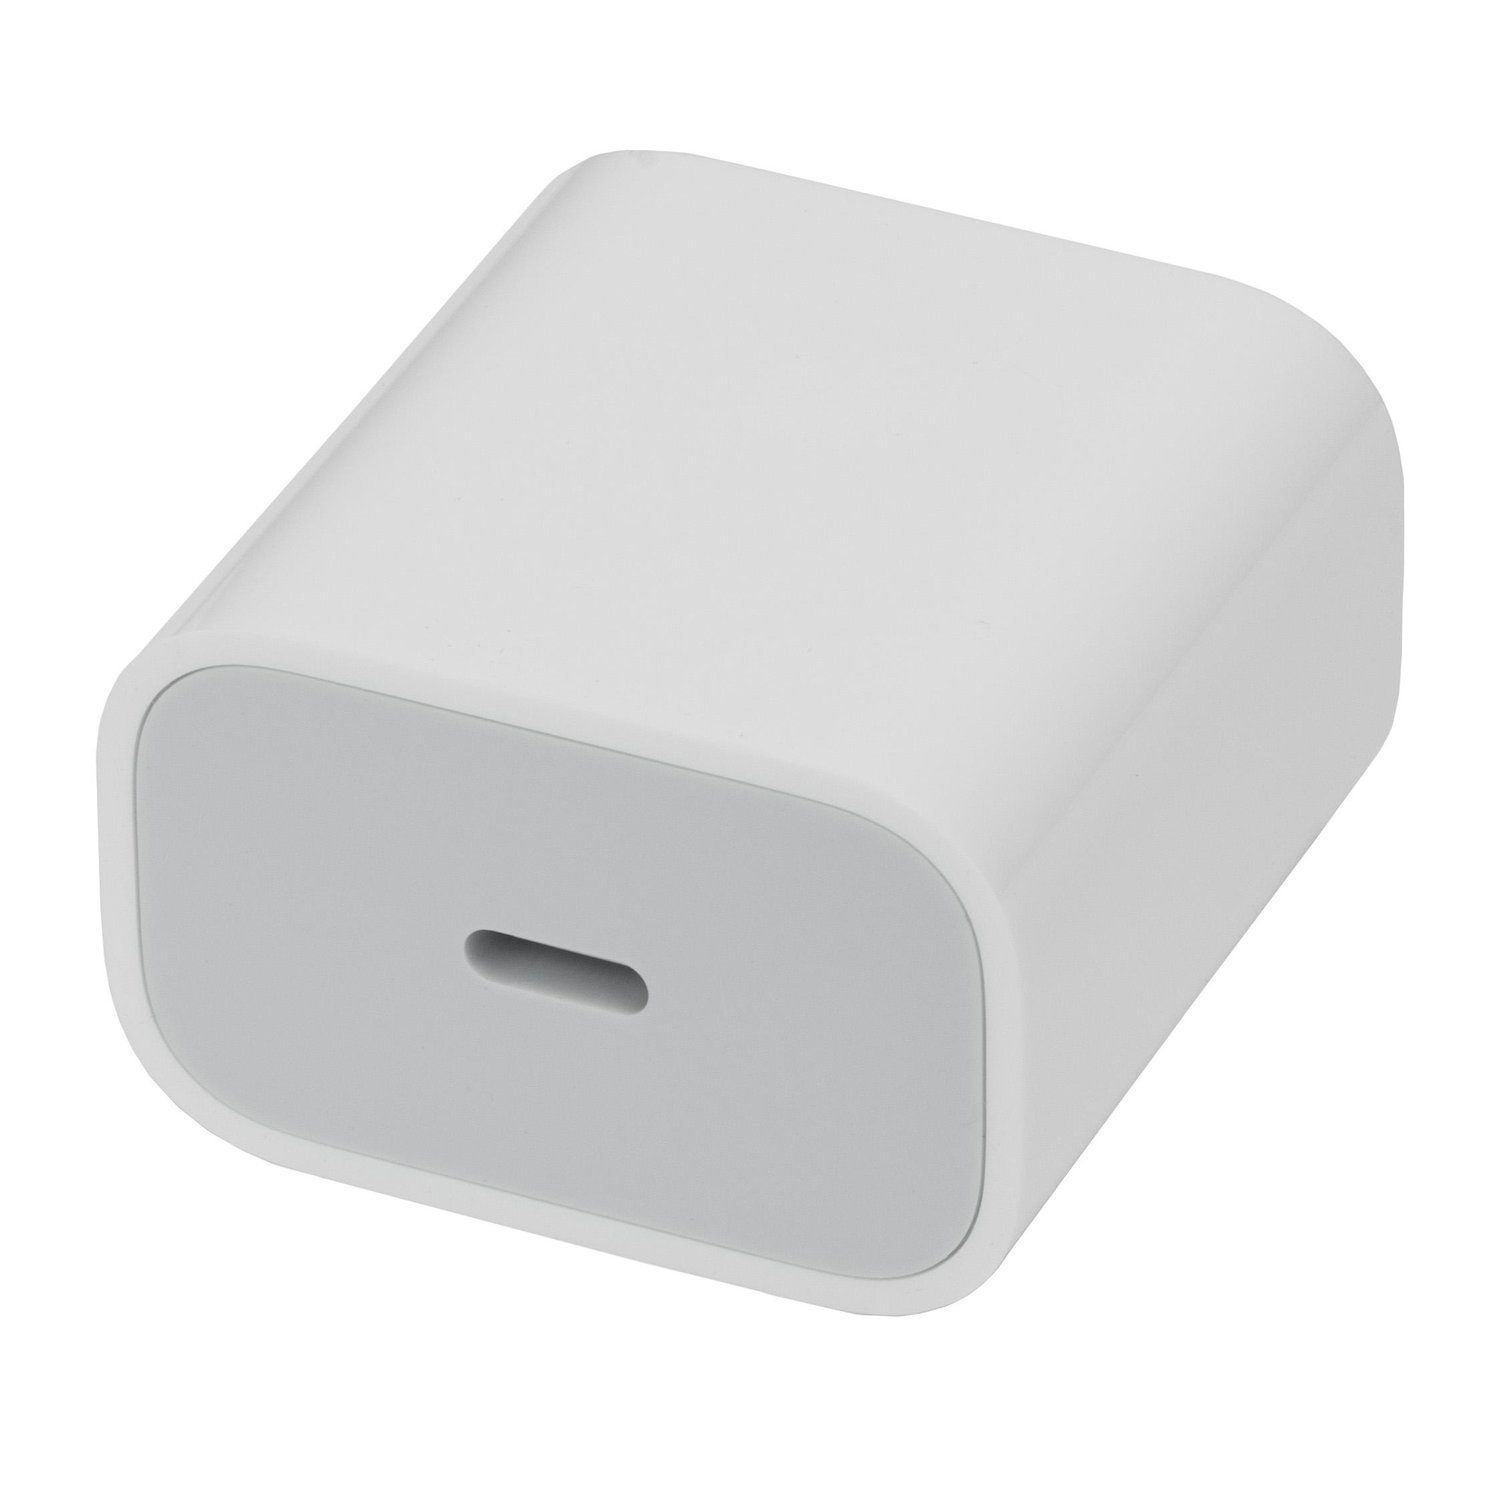 100%ige Echtheitsgarantie! Apple Genuine 20W USB-C Adapter/Charger Power